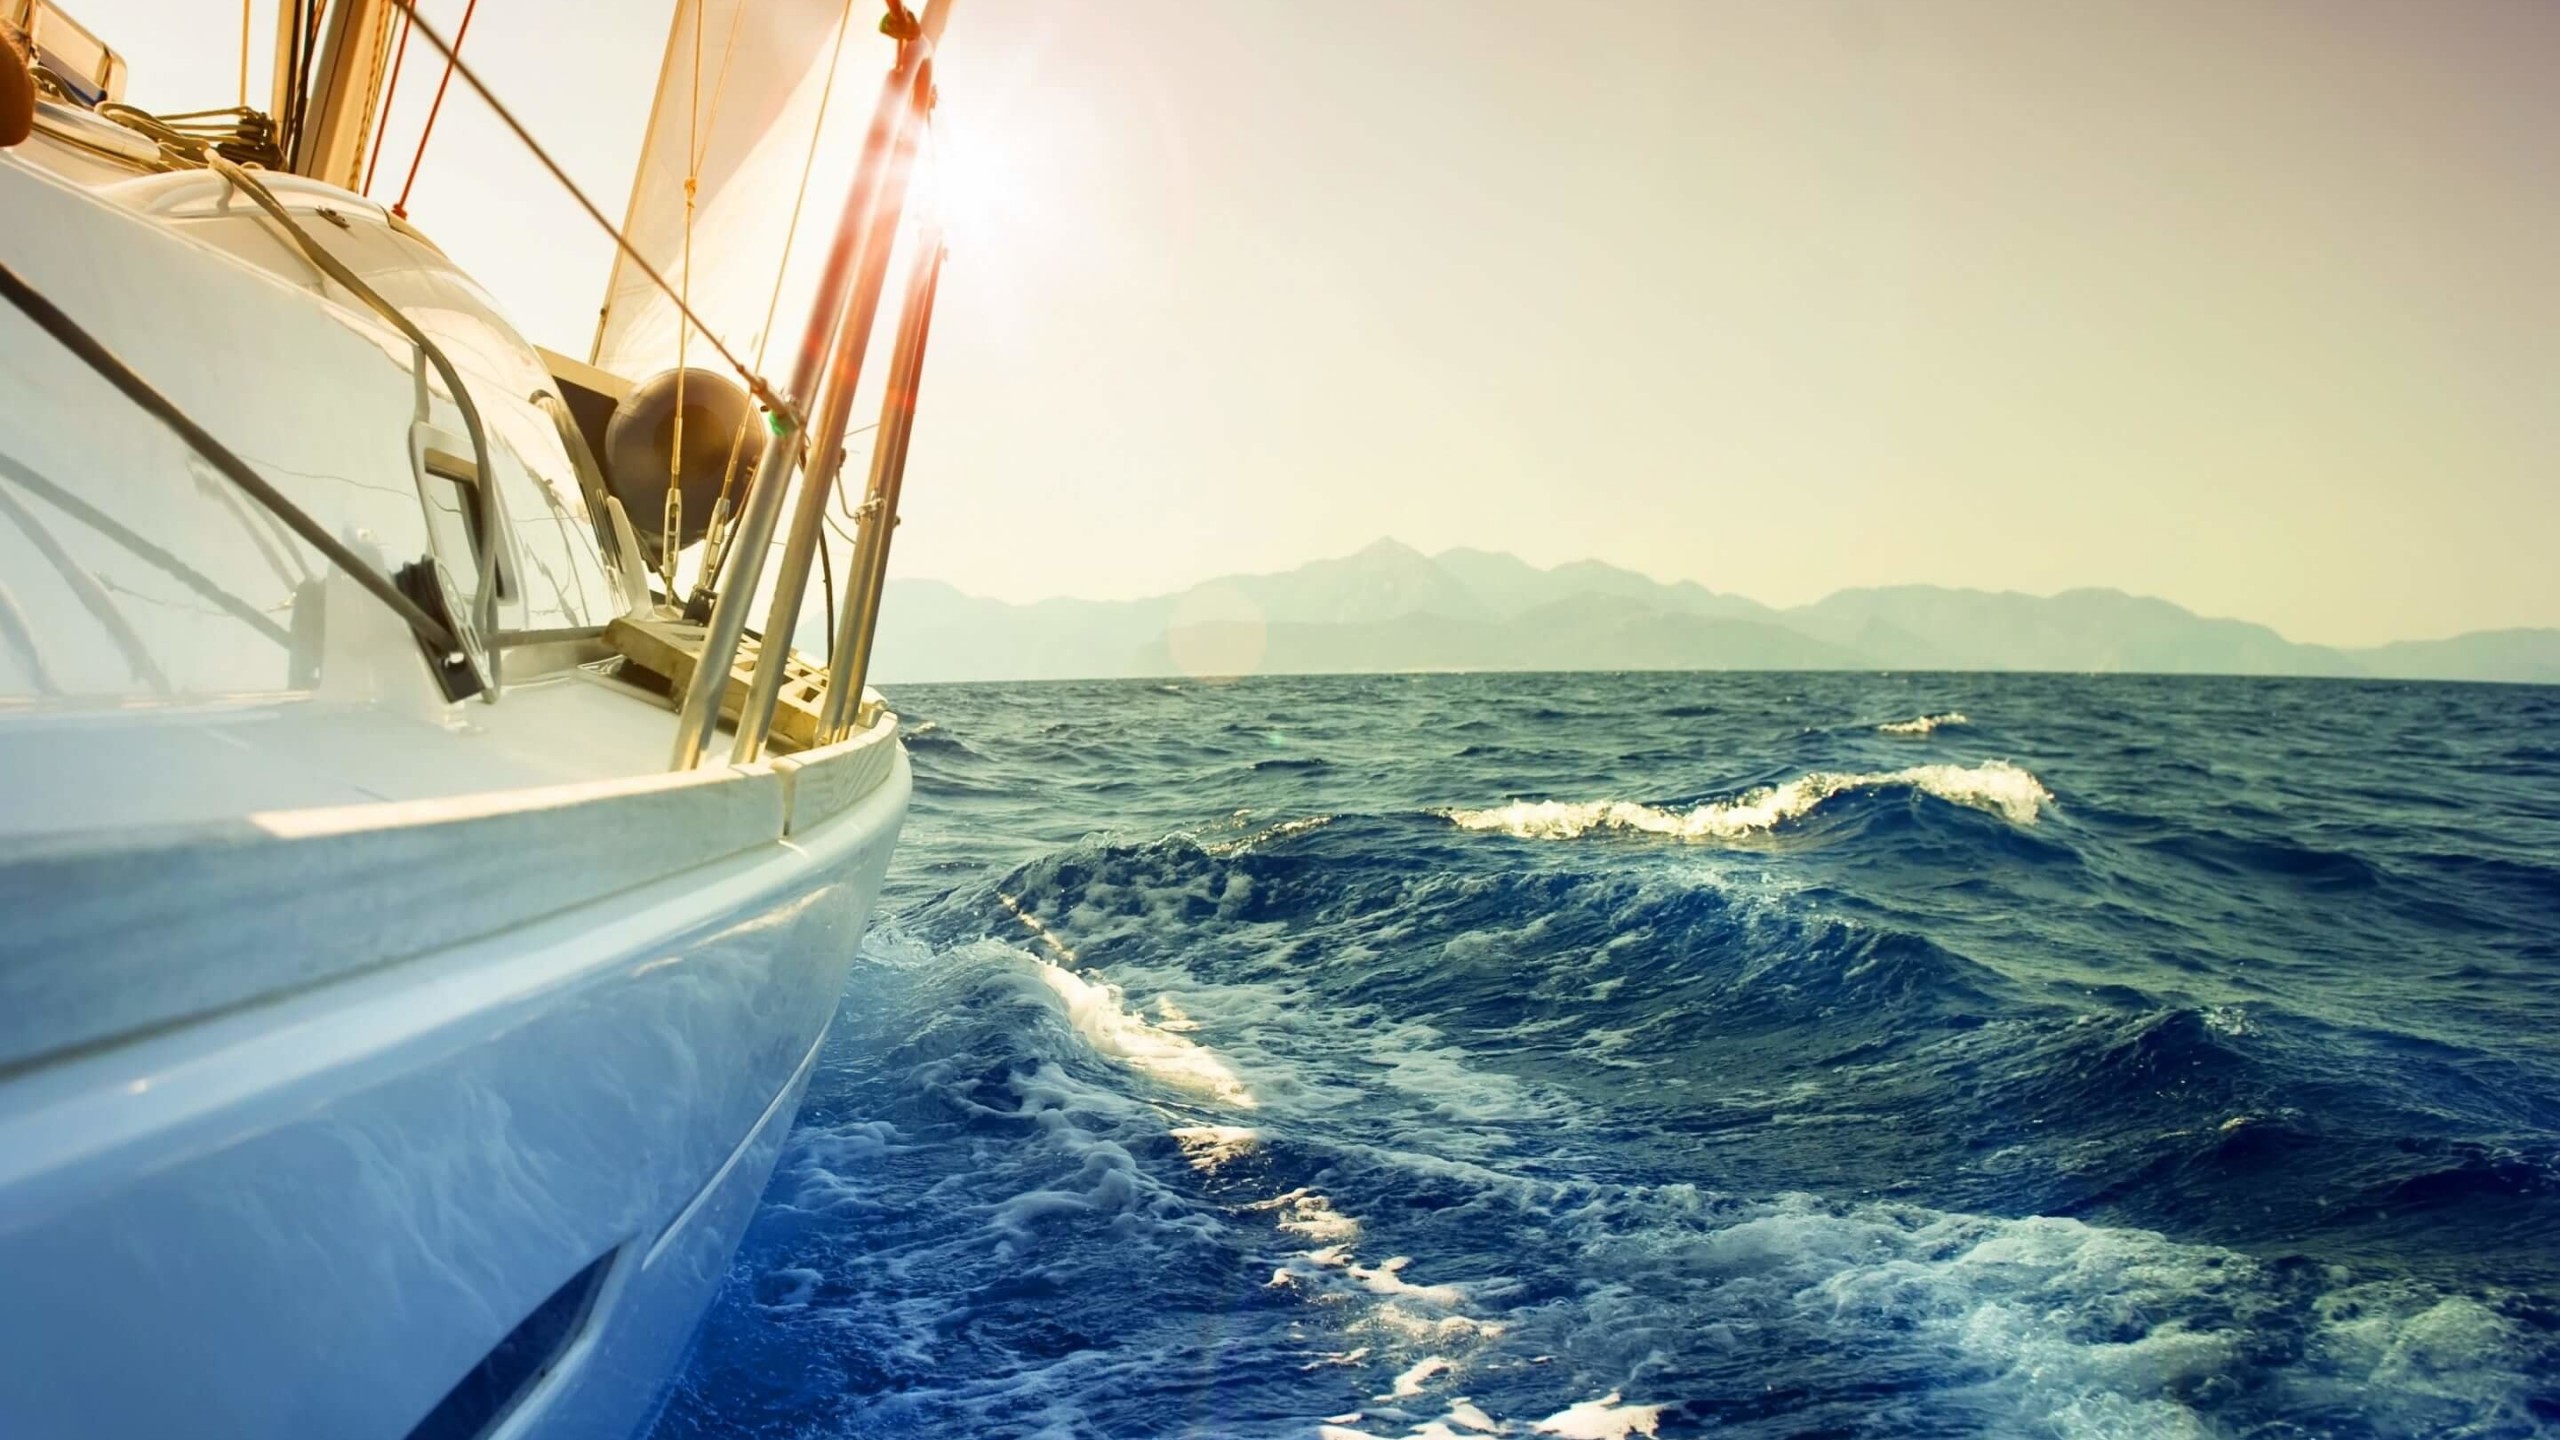 Yacht Sailing Downwind at Sunset Wallpaper for Desktop 2560x1440